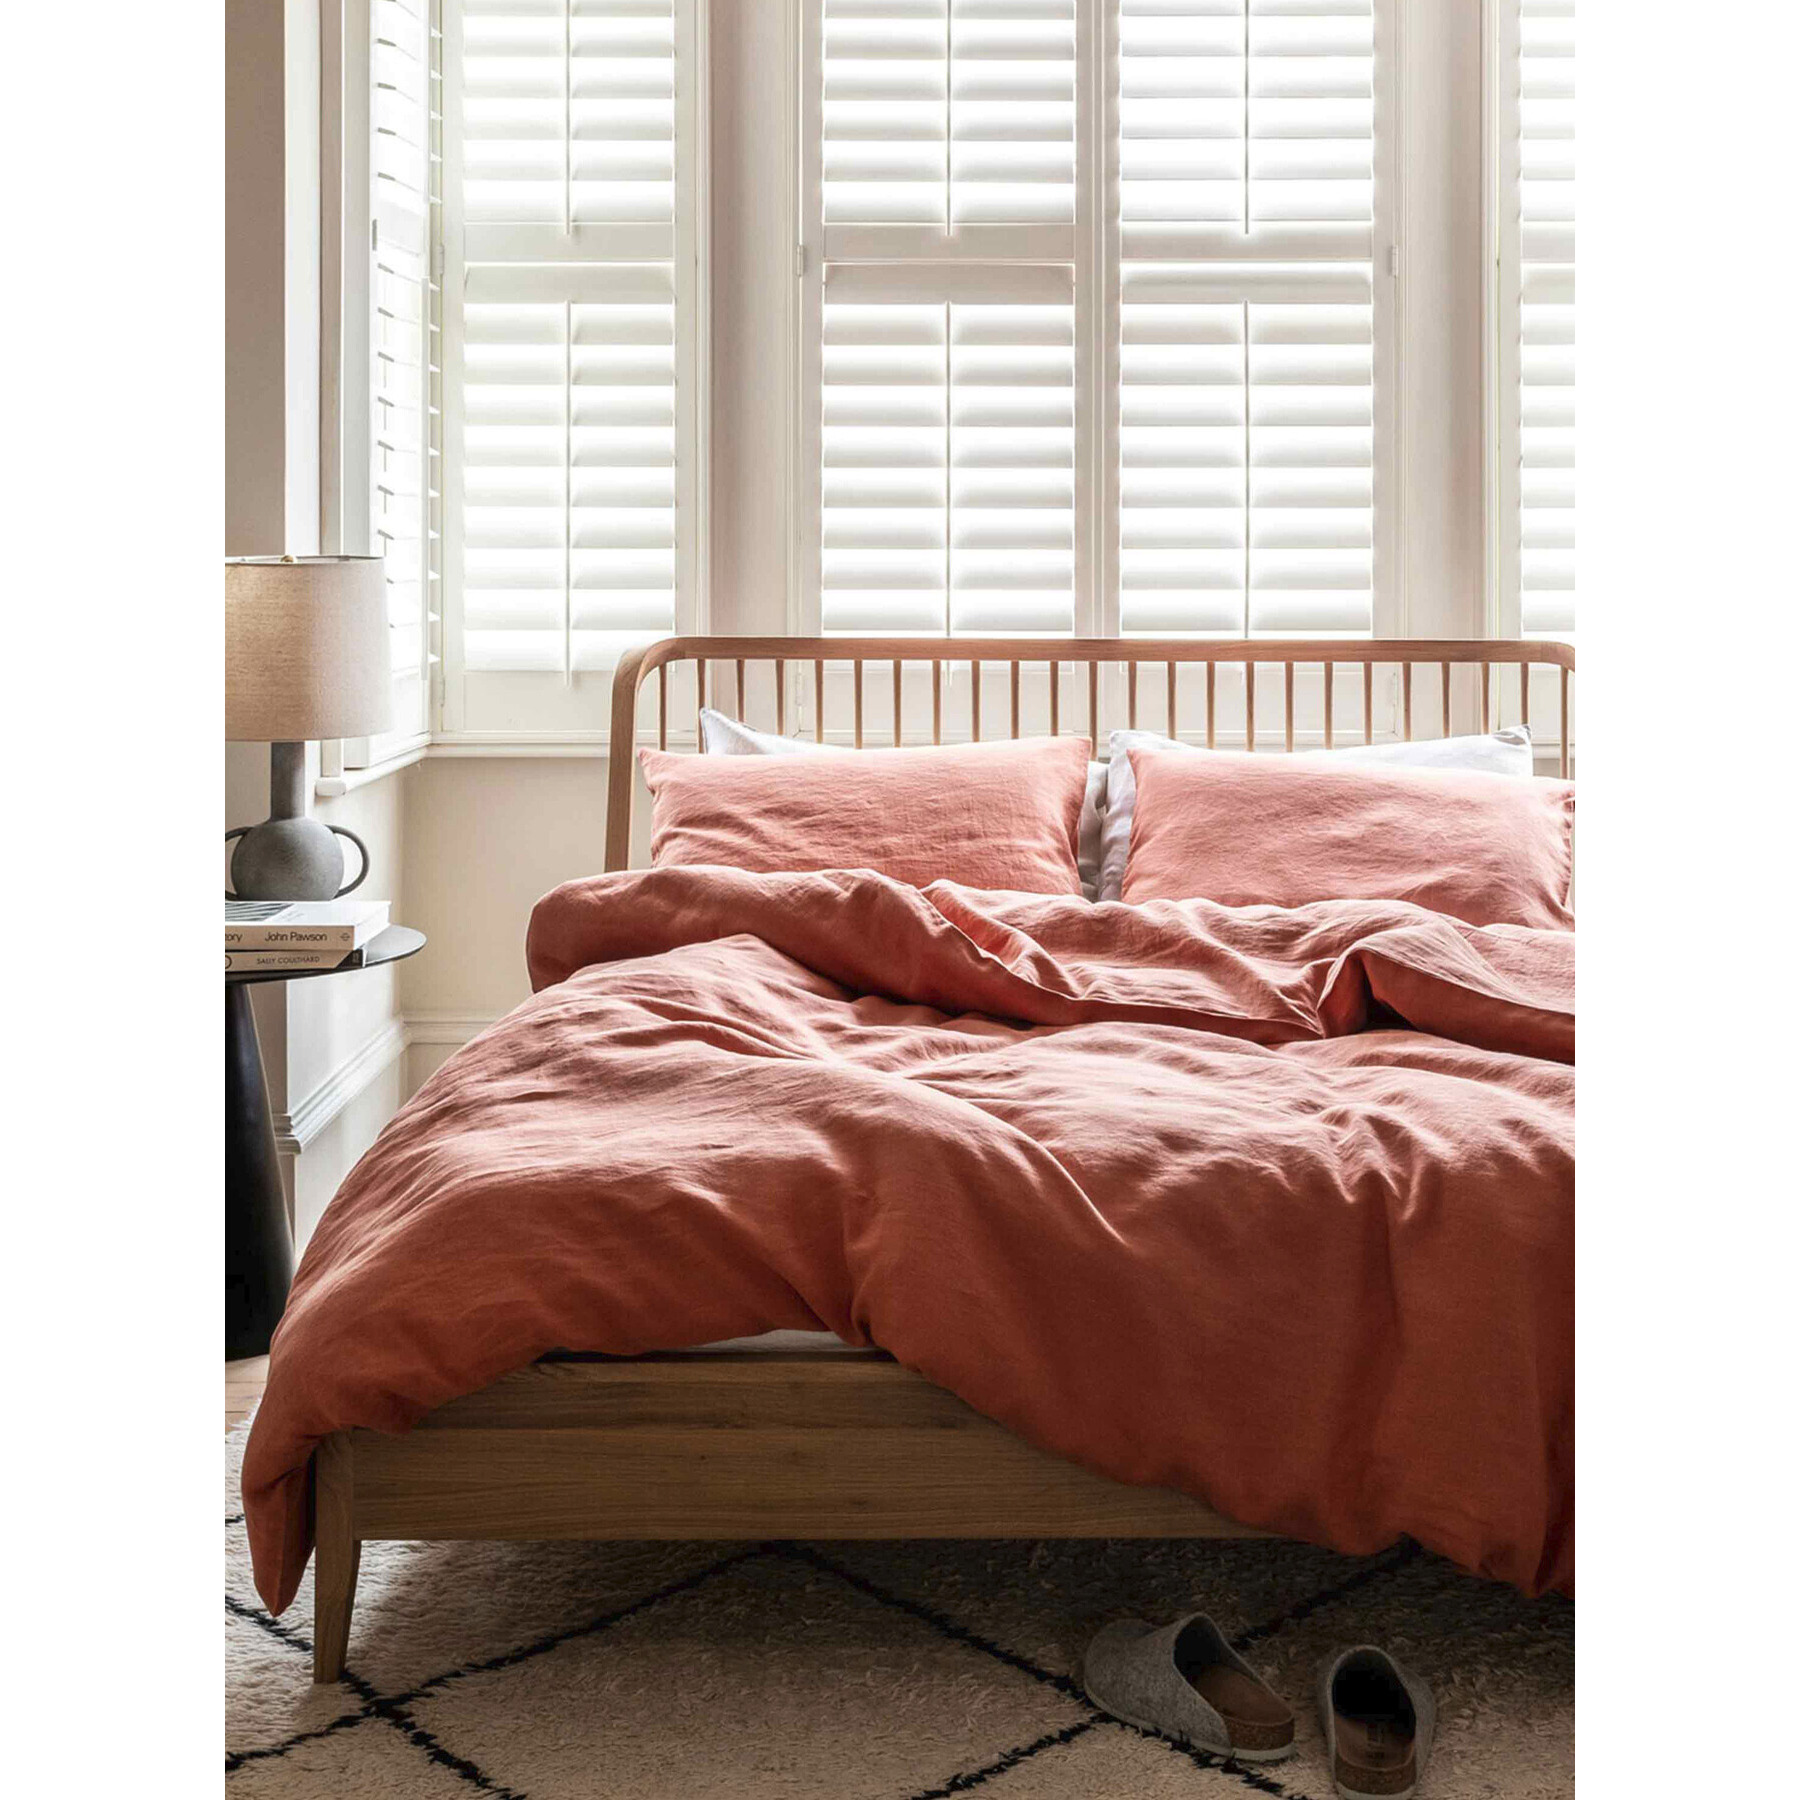 Piglet in Bed Linen Flat Sheet - Size Single Orange - image 1